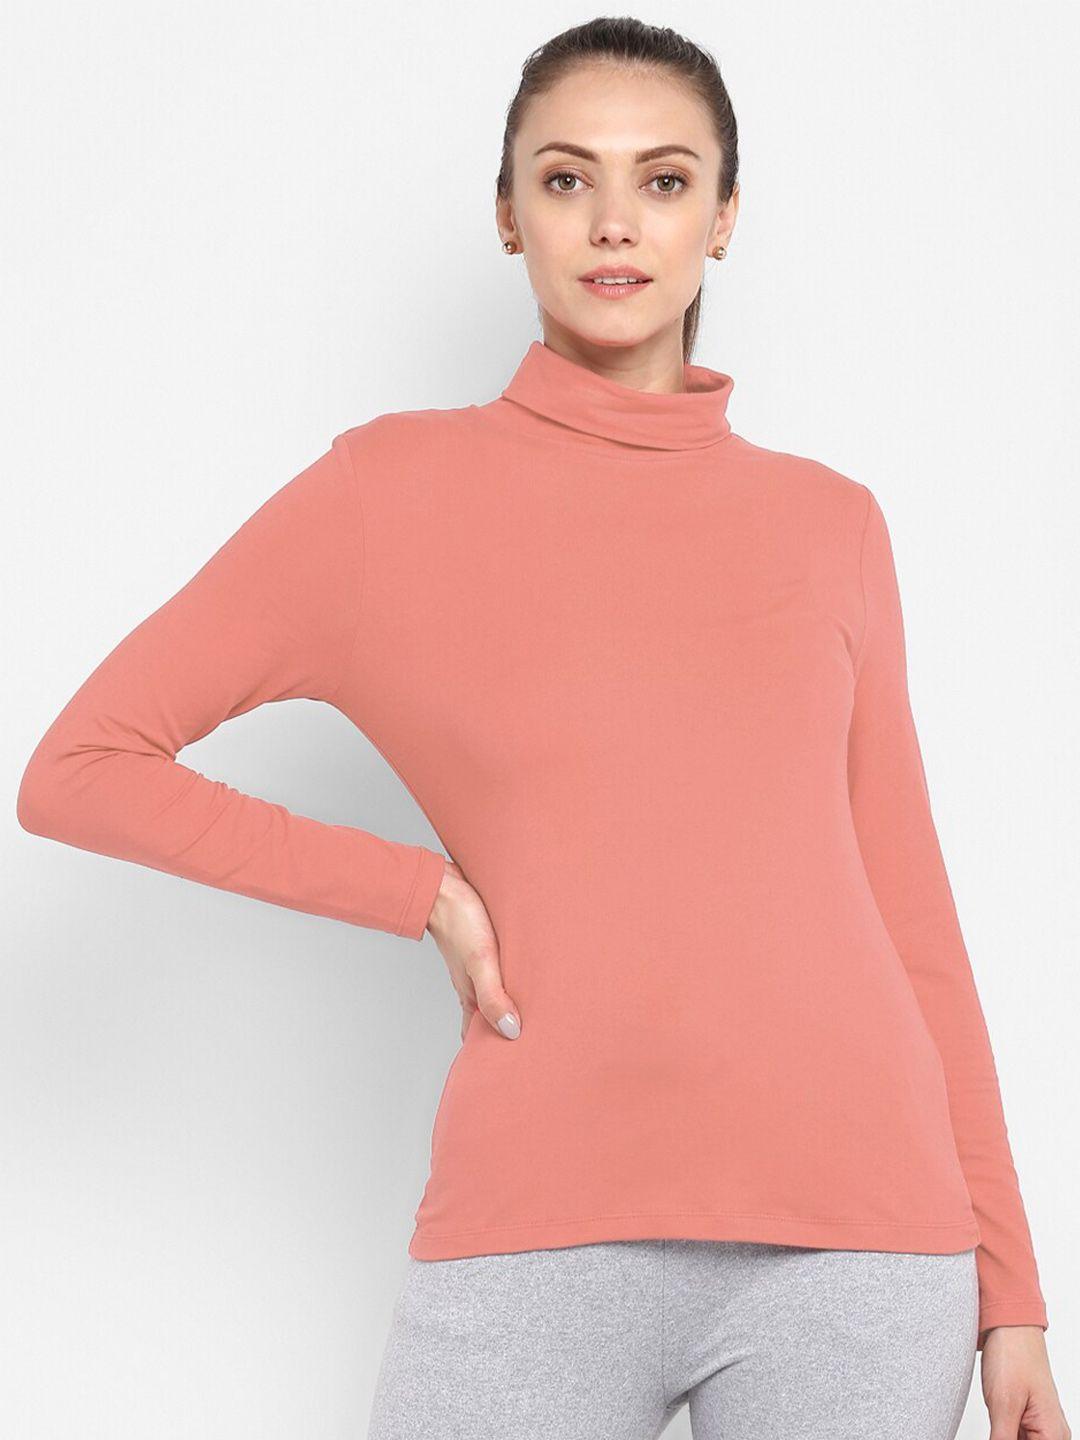 sharktribe women solid pink high neck slim fit t-shirt